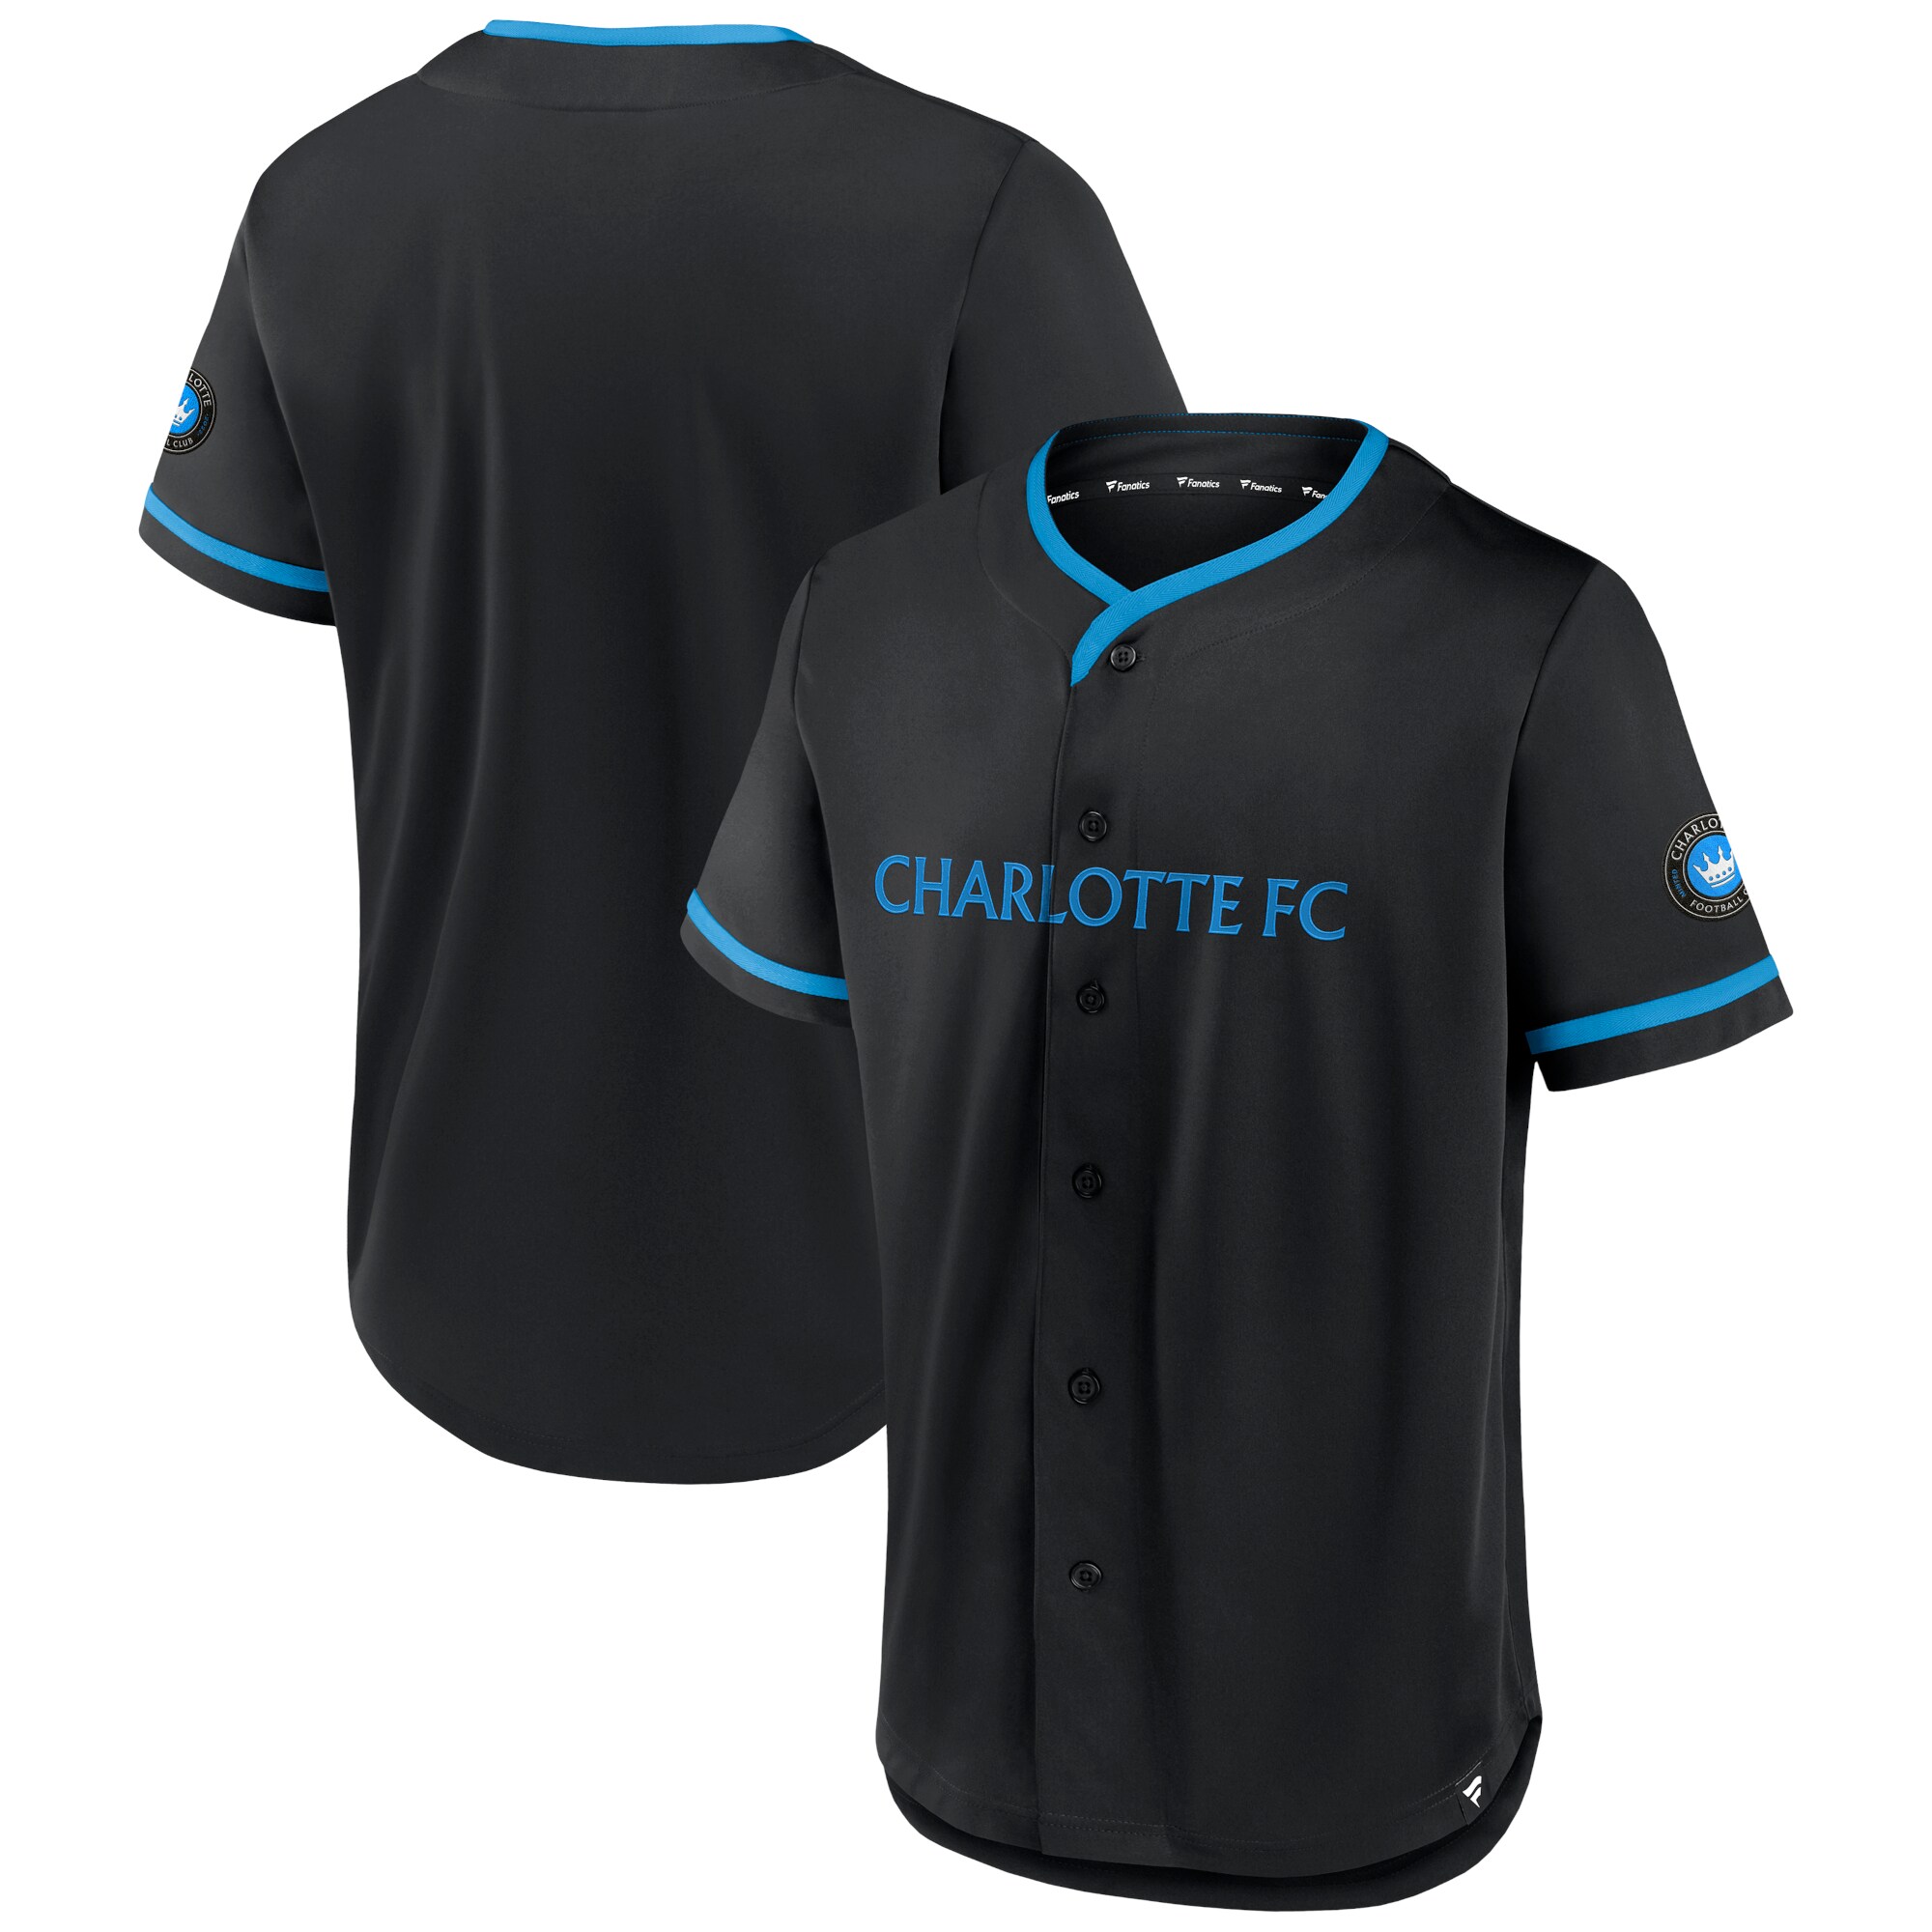 Men's Charlotte FC Jerseys Black/Blue Ultimate Player Baseball Style